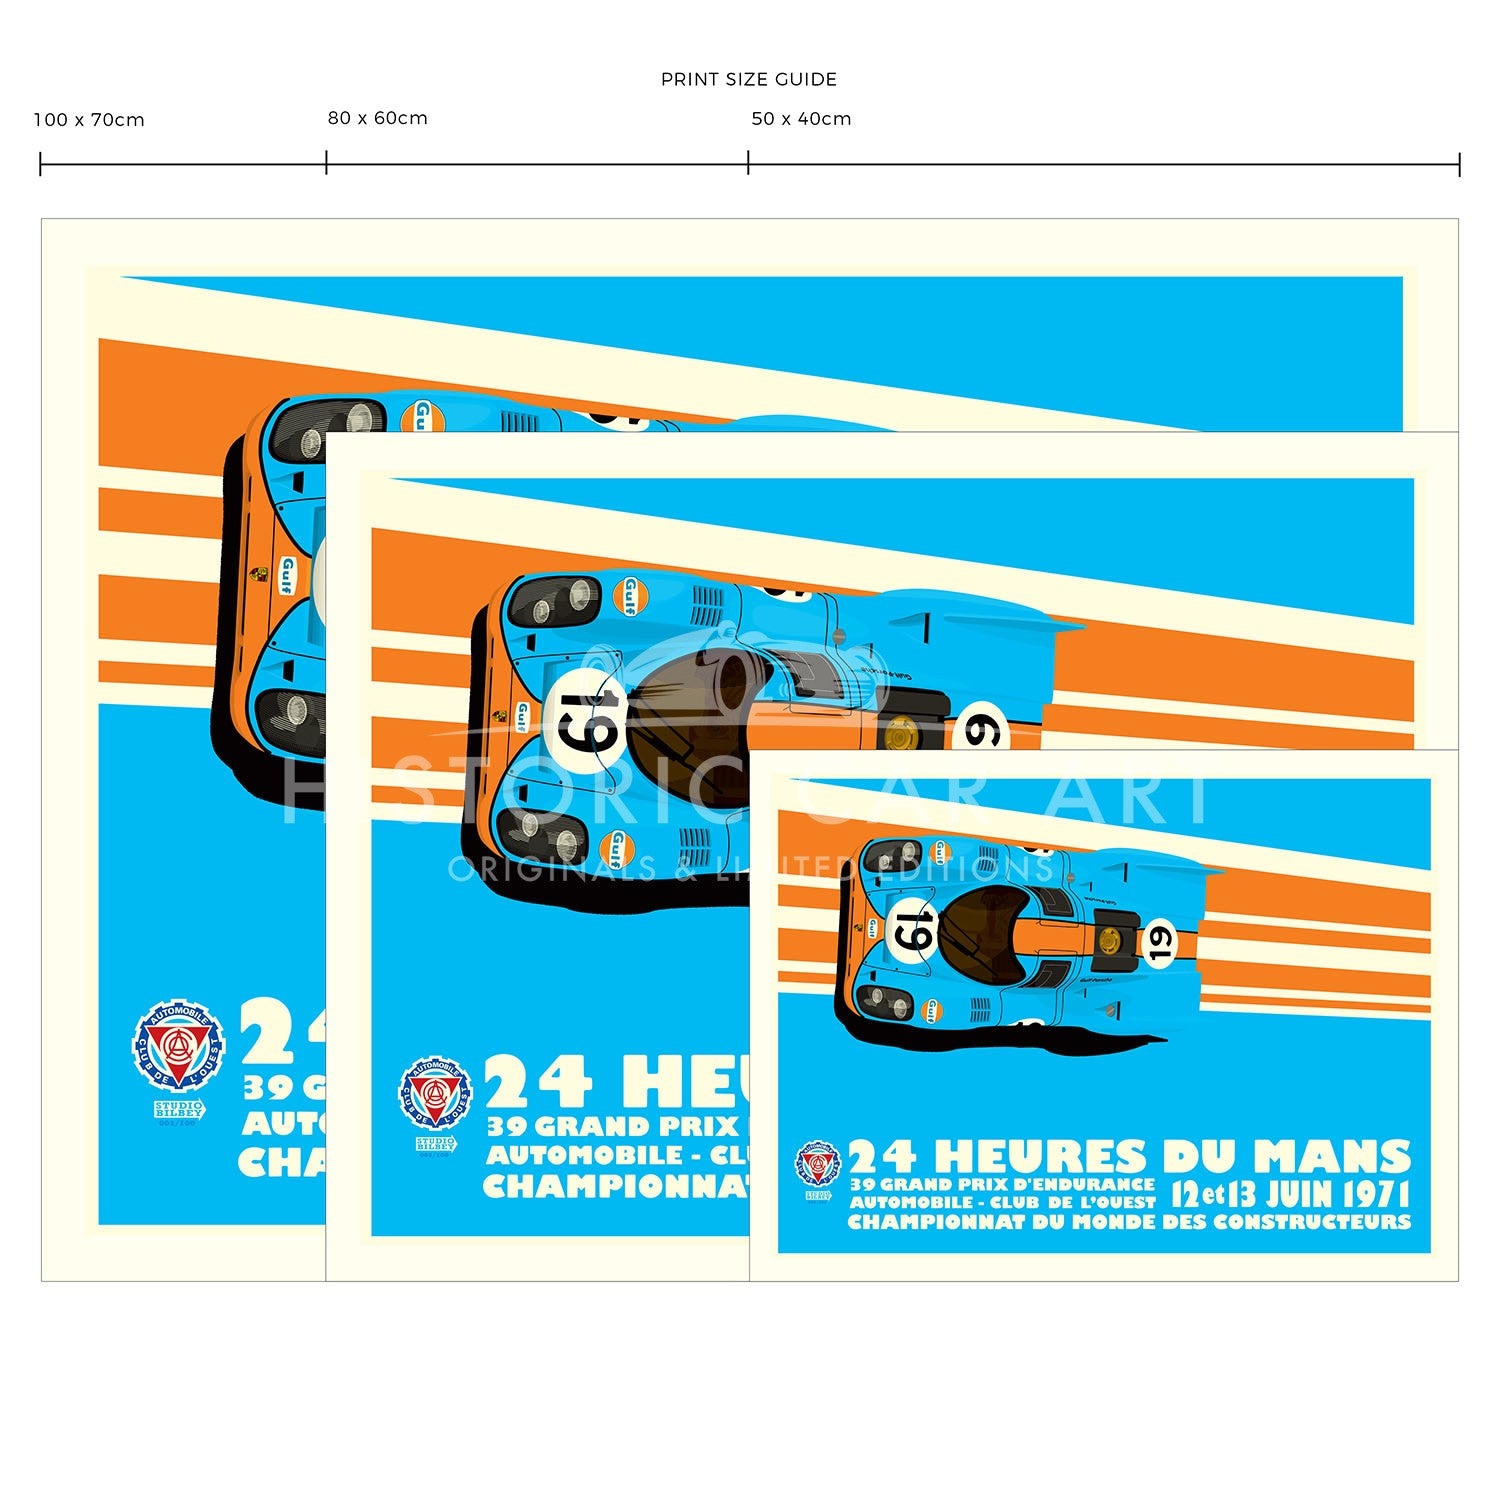 Porsche 917 Le Mans Winners 1970 & 1971 | Art Print